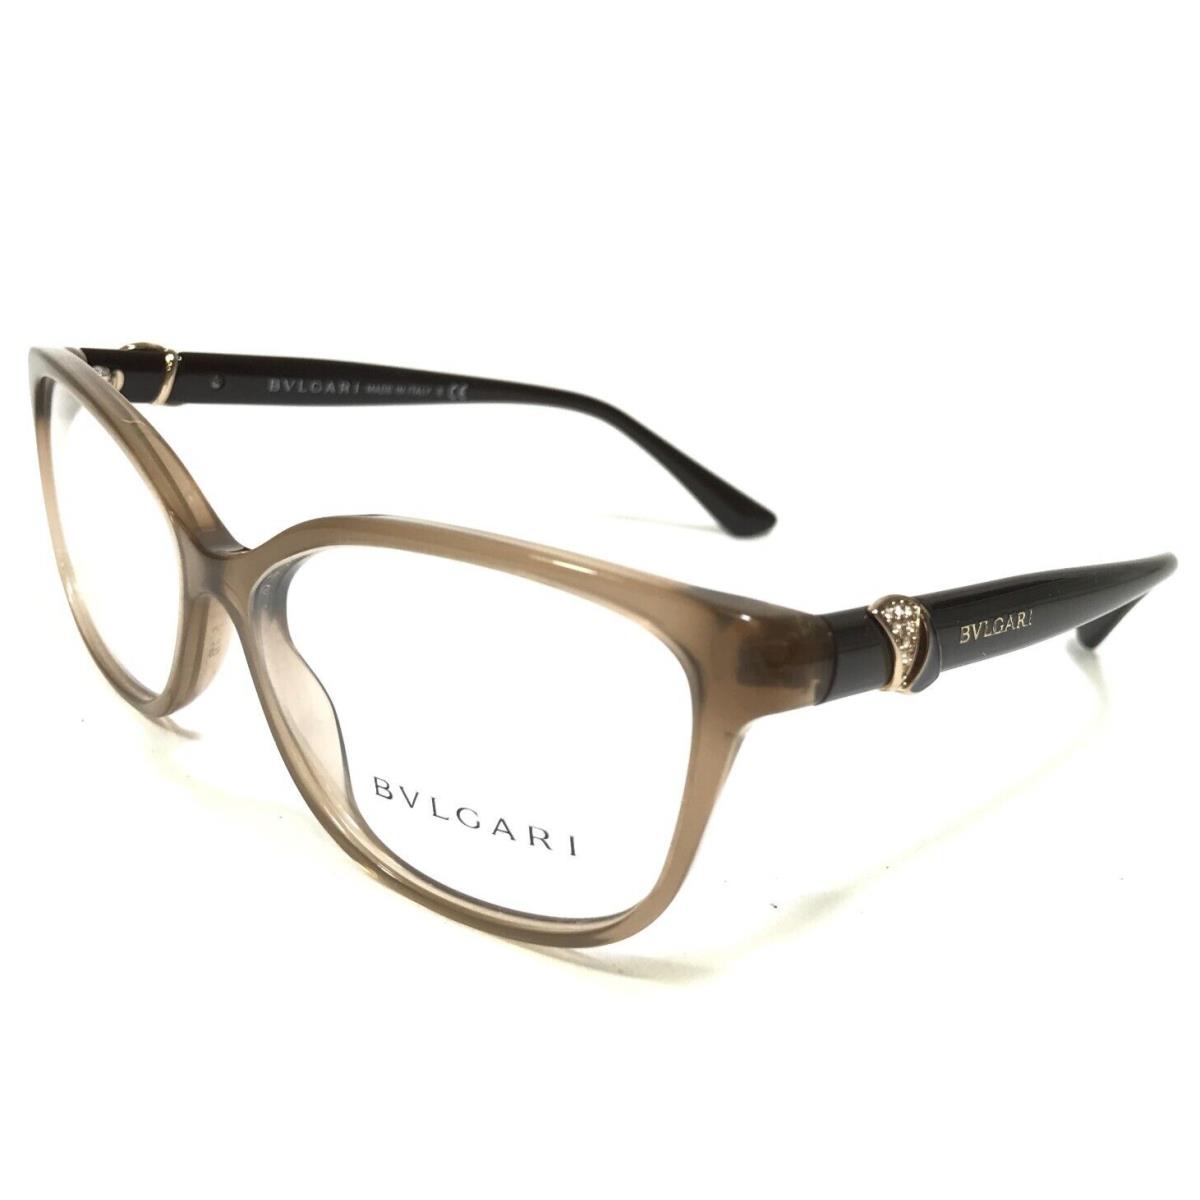 Bvlgari Eyeglasses Frames 4128-B 5406 Clear Brown Gold Crystals 54-16-140 - Frame: Brown